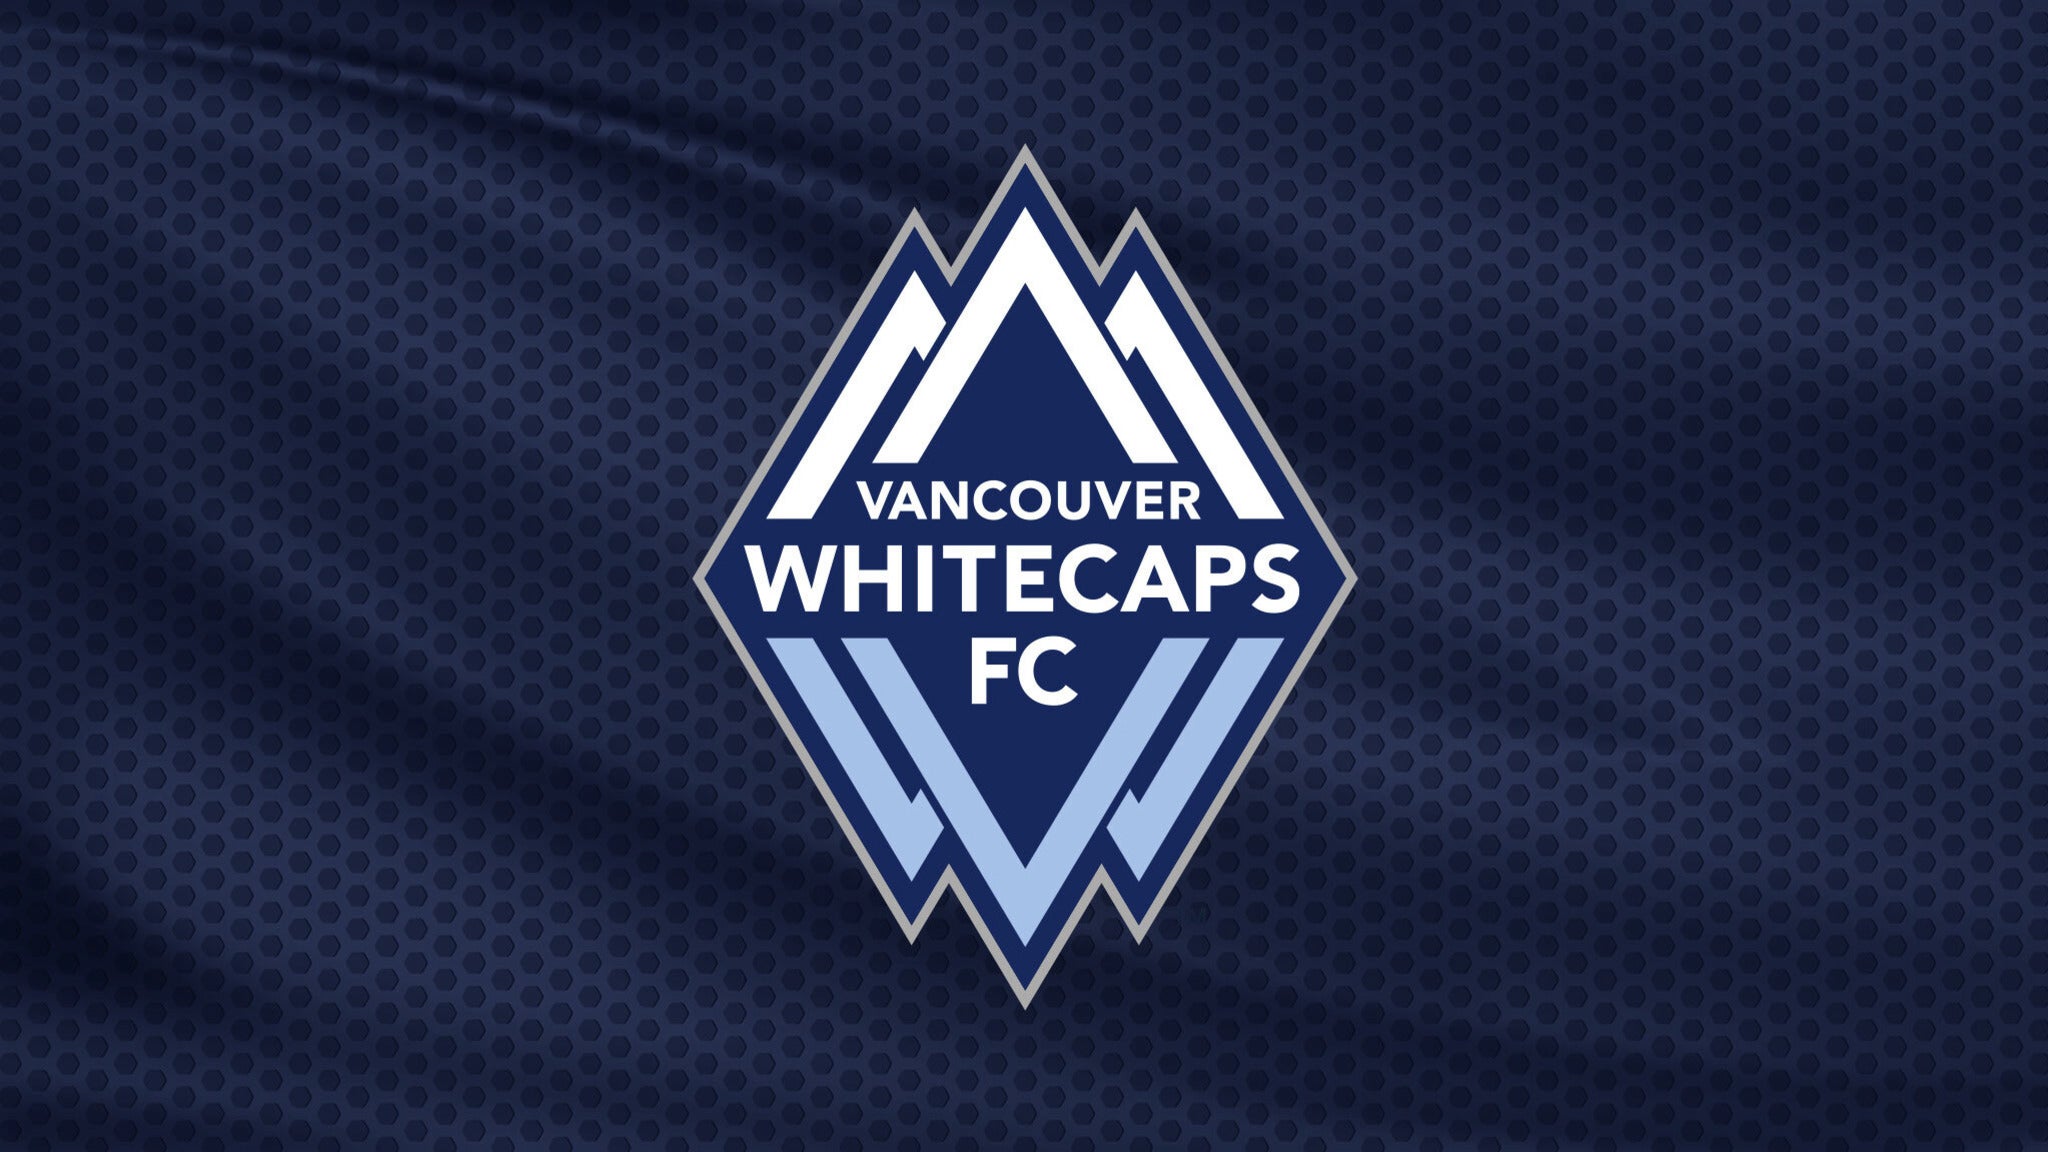 Vancouver Whitecaps FC vs. Seattle Sounders FC in Vancouver promo photo for Vancouver Whitecaps FC Exclusive presale offer code